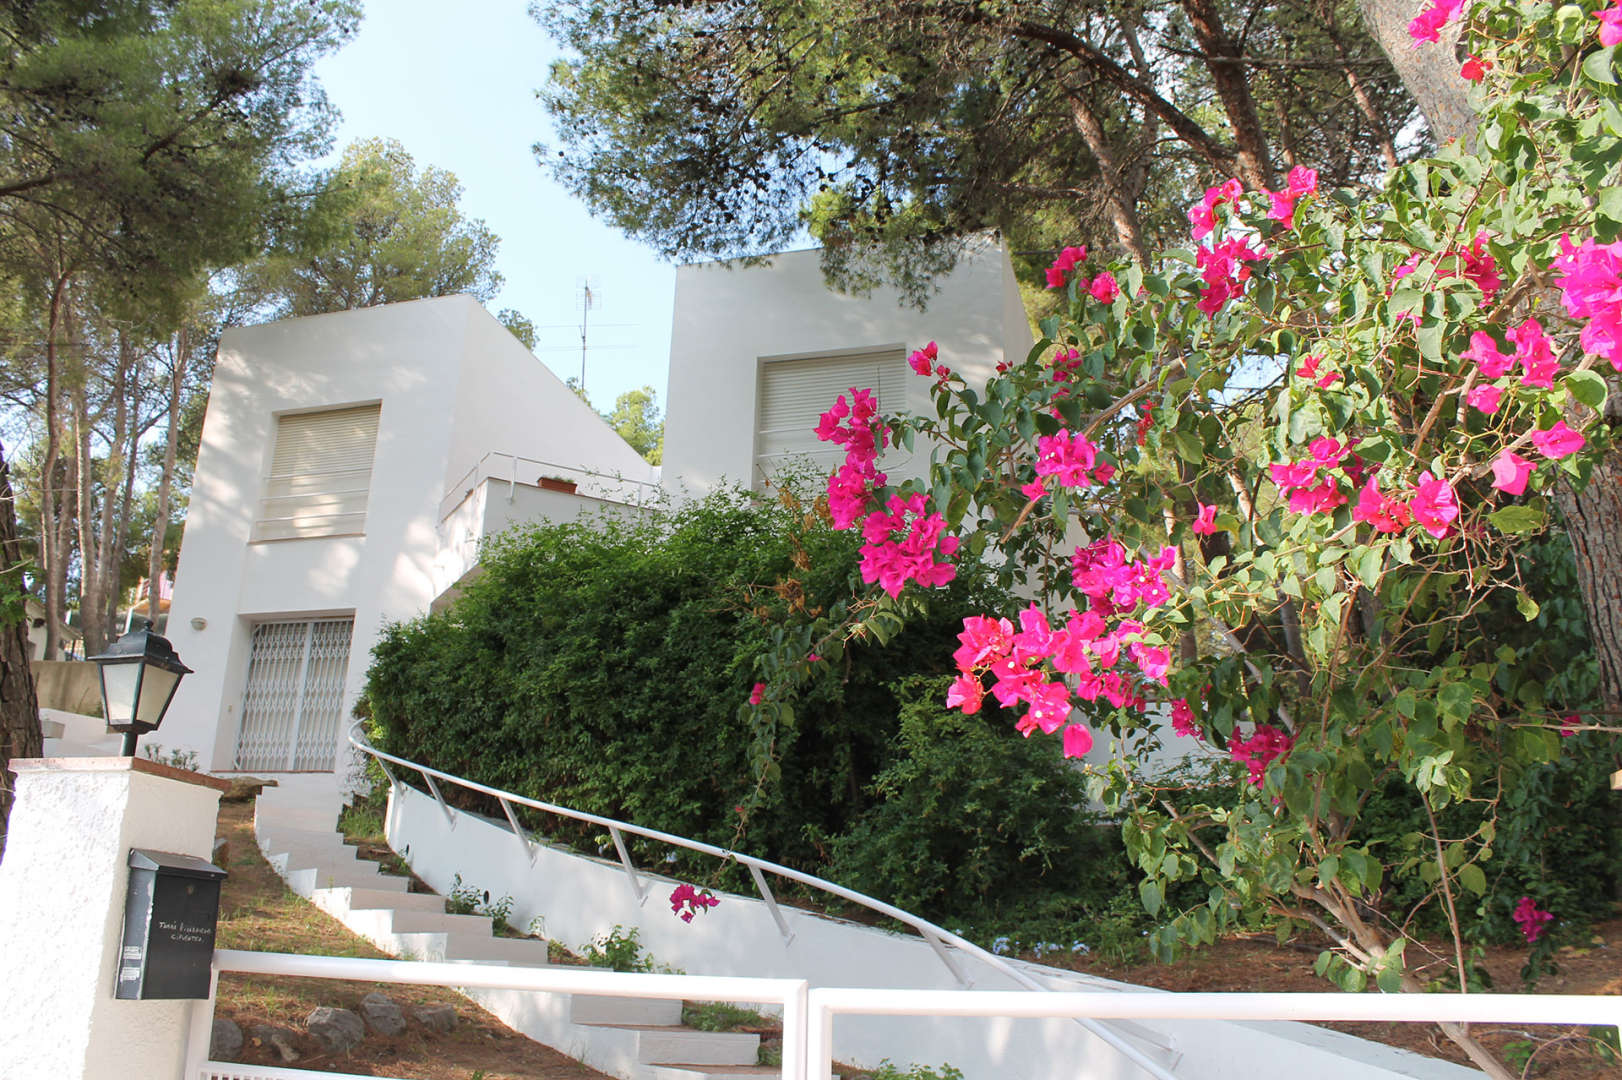 Vista de la fachada de una casa. Vender casas en Castelldefels.